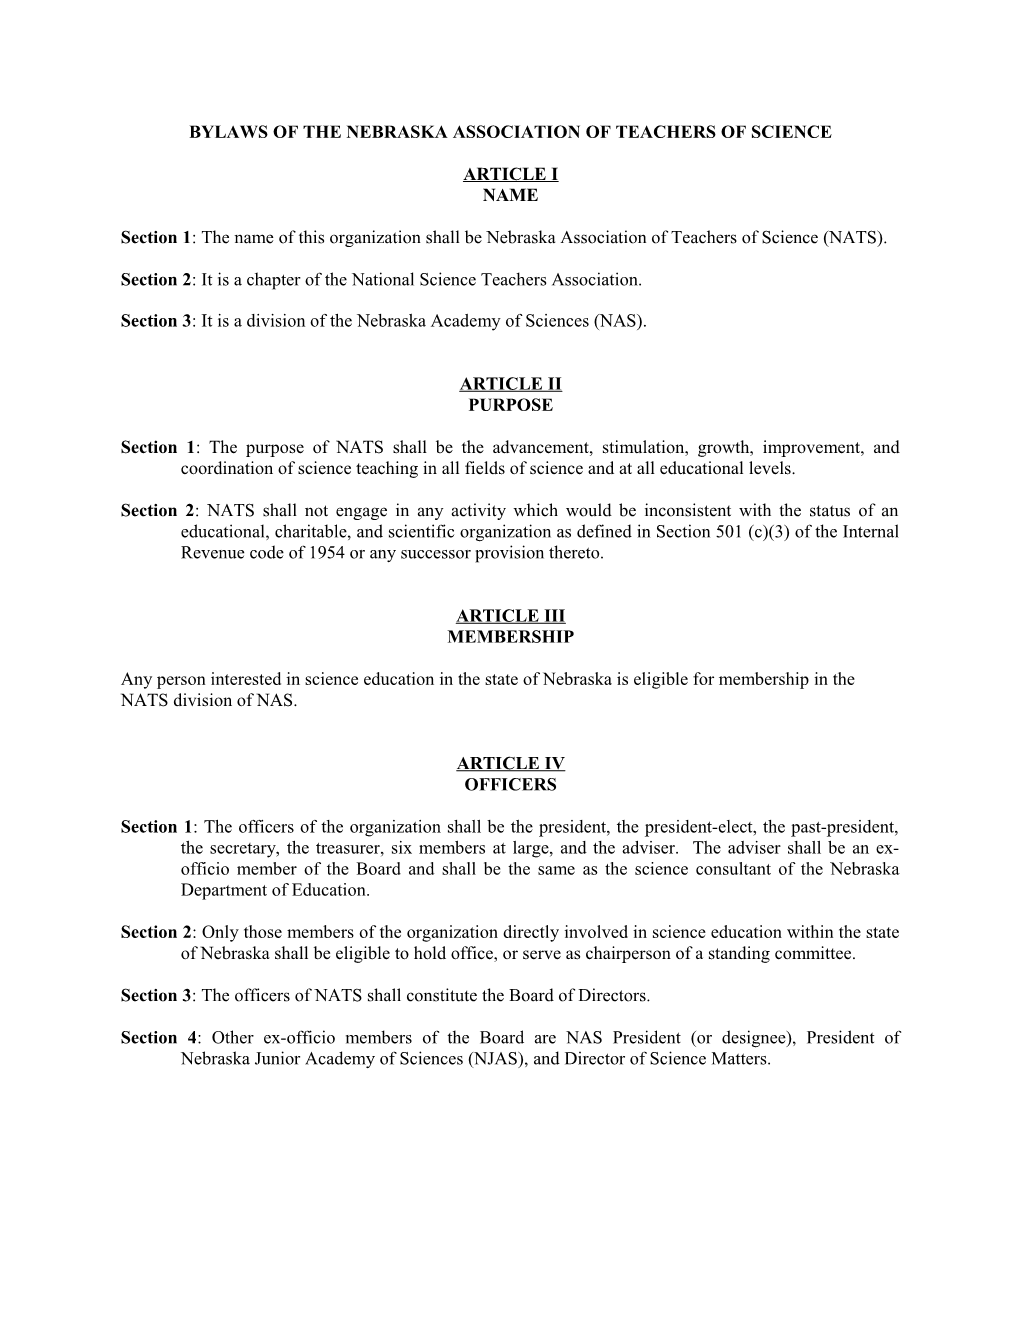 Bylaws of the Nebraska Association of Teachers of Science